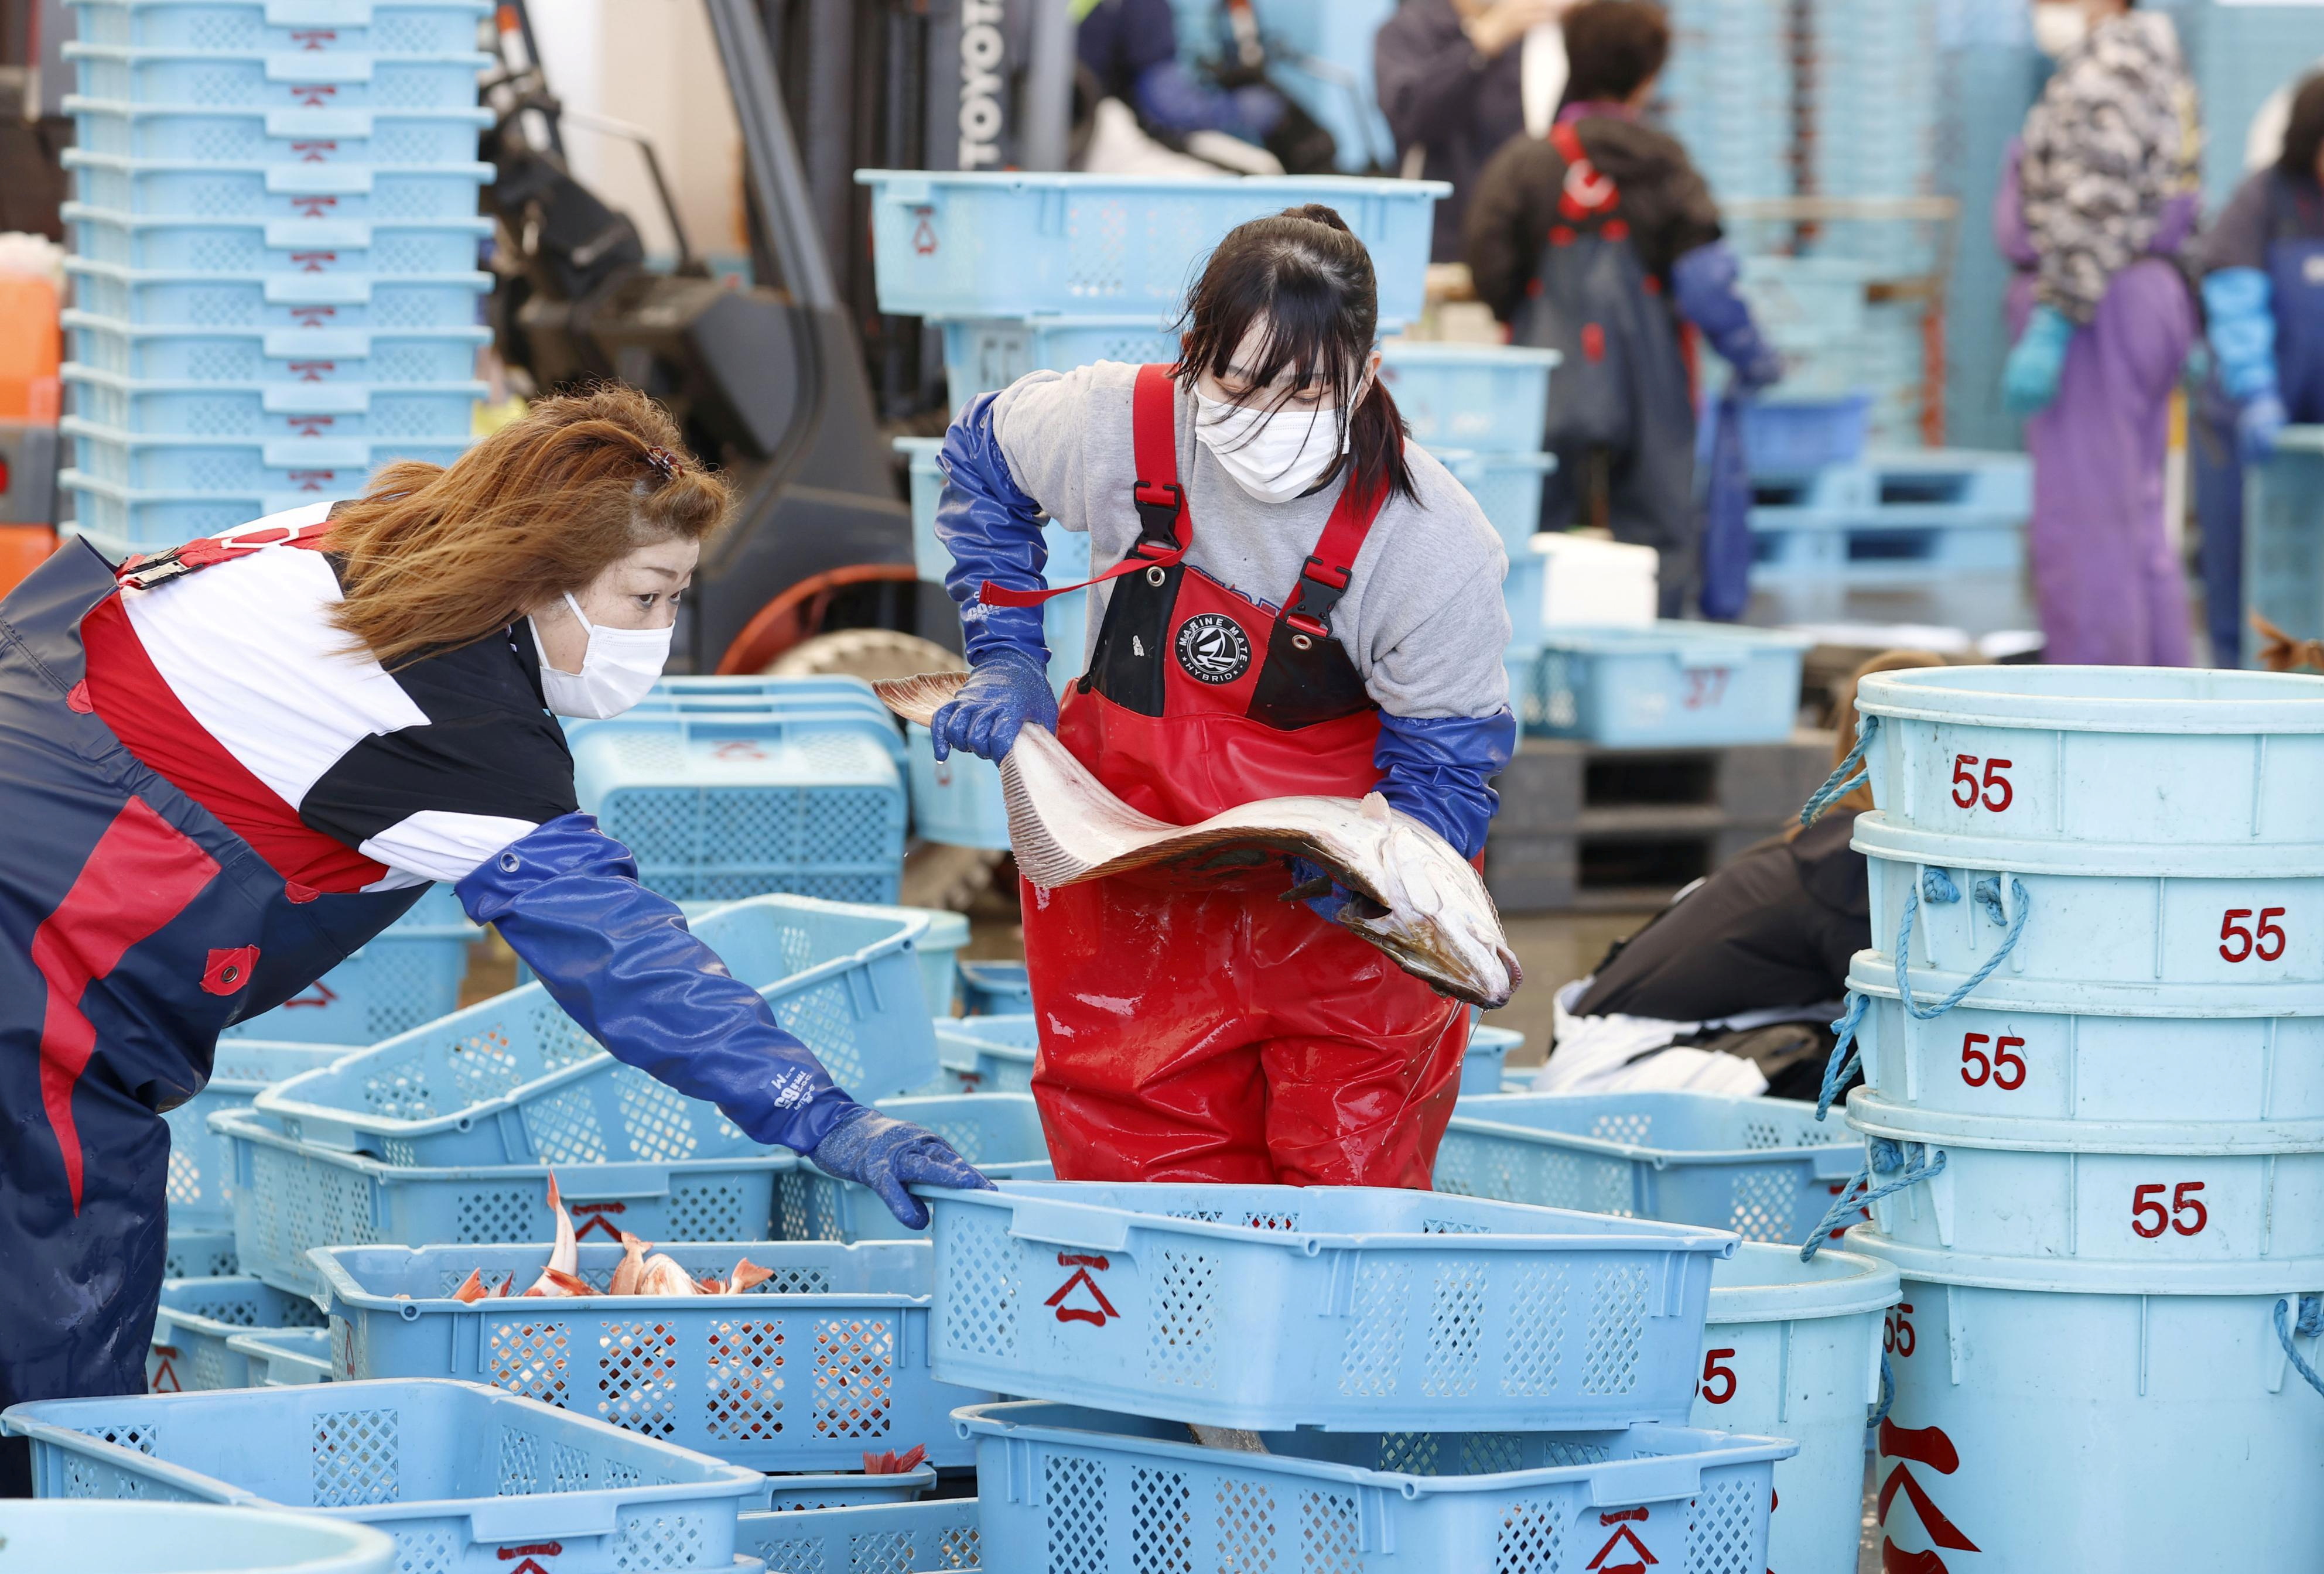 Workers sort fishes after a fishing operation at Matsukawaura fishing port in Soma, Fukushima prefecture